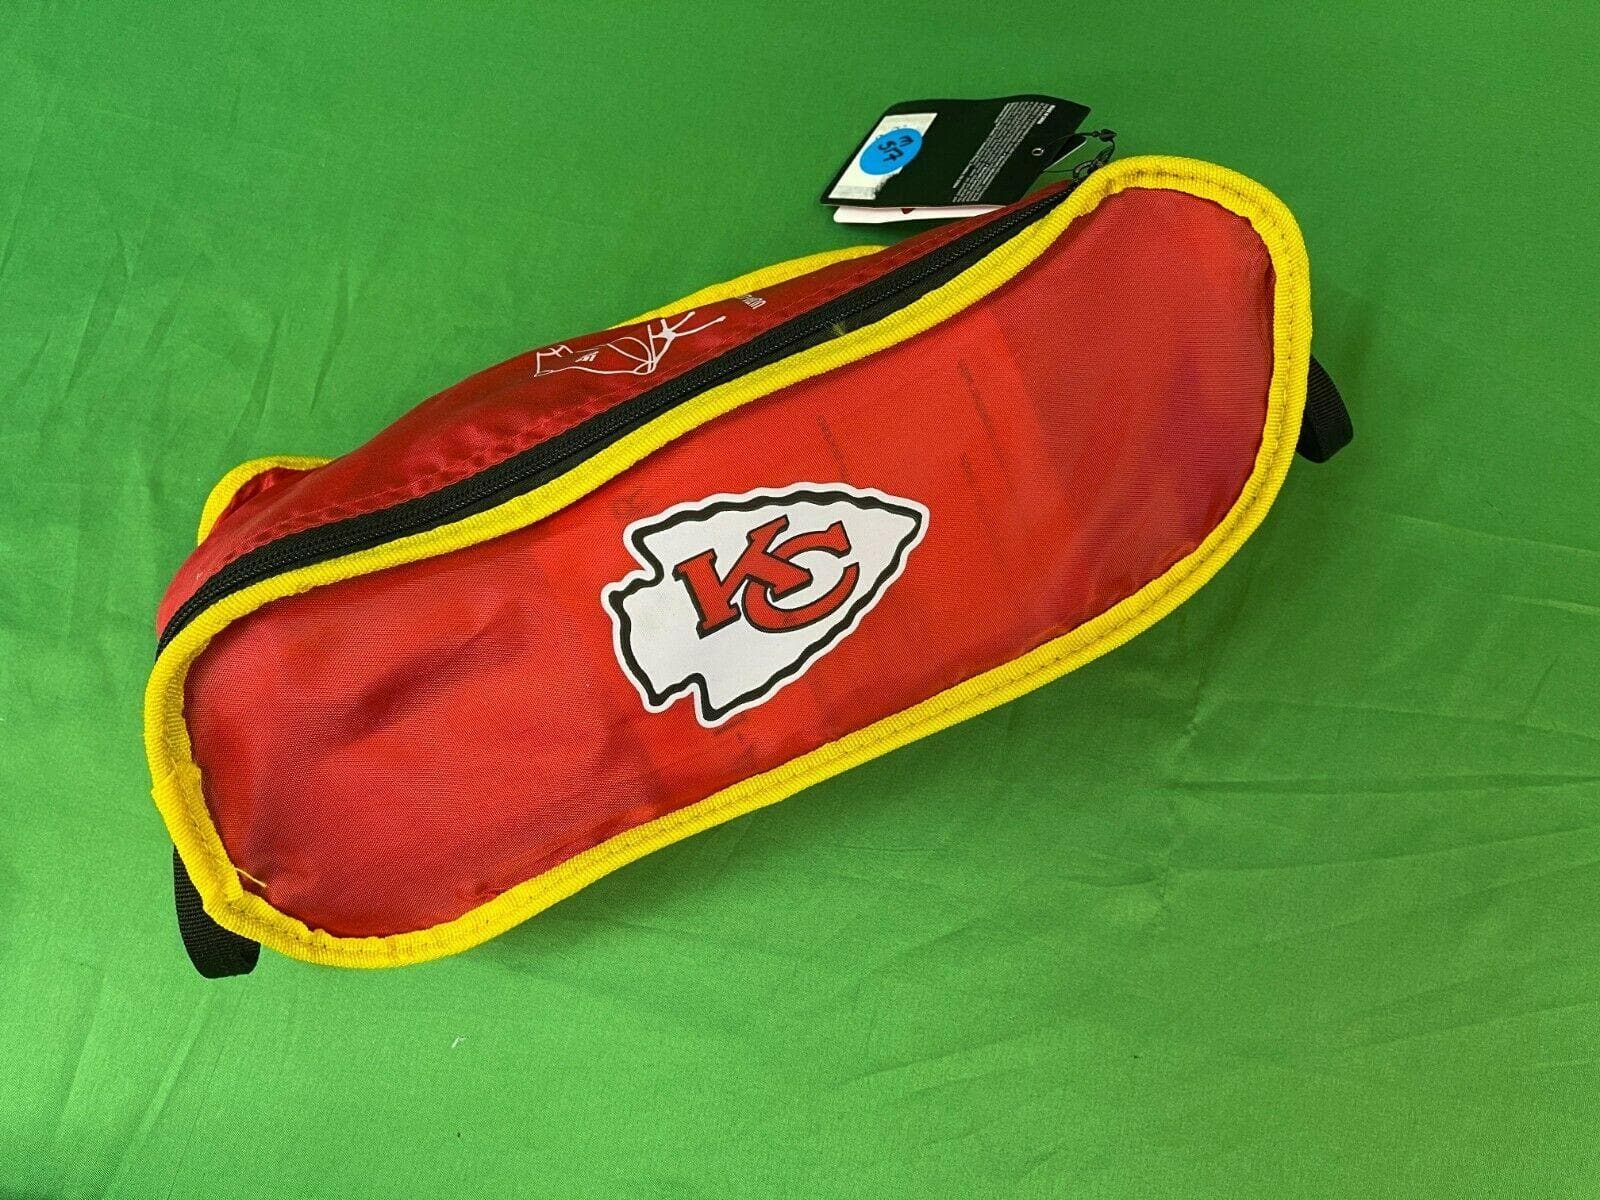 NFL Kansas City Chiefs Logo Ultra-Lite Chair Portable Camping NWT